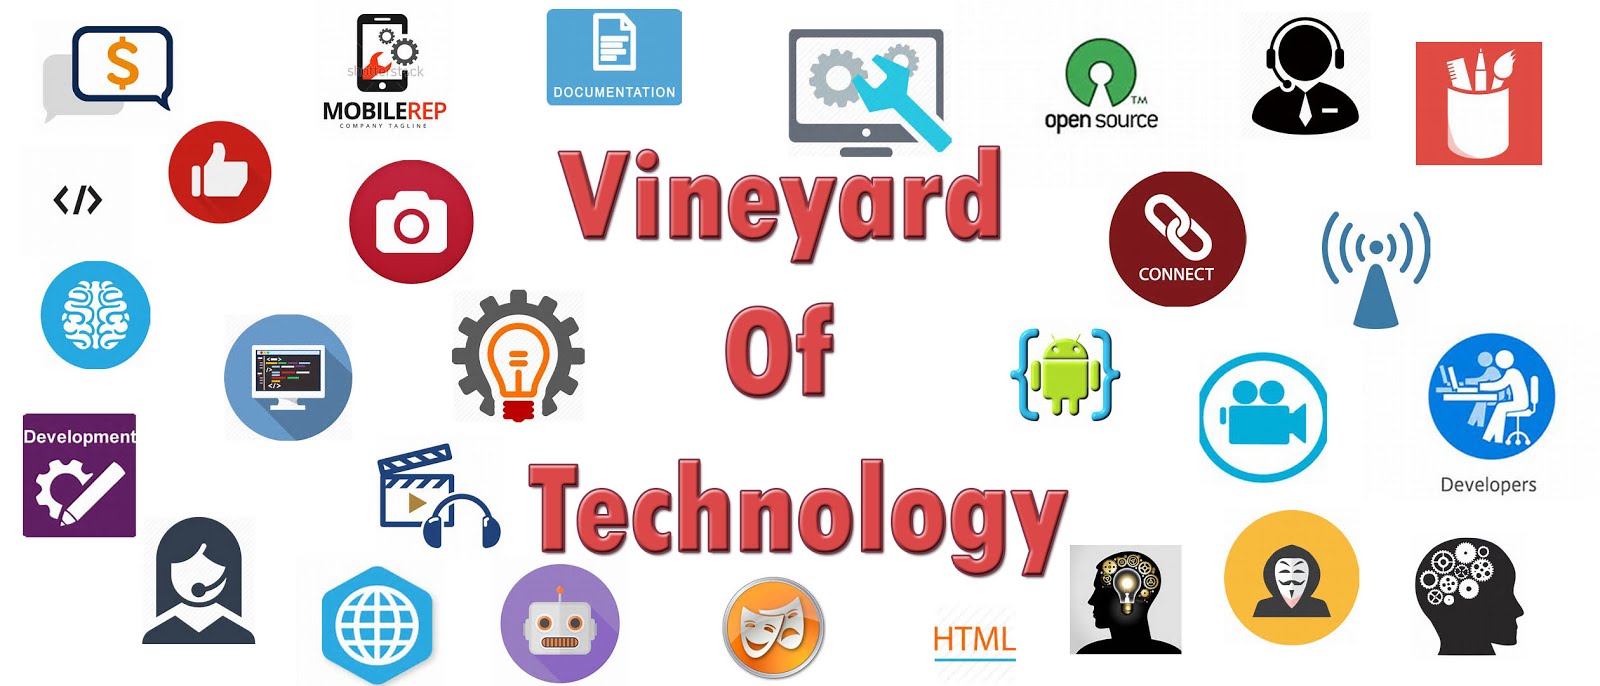 Vineyard Of Technology